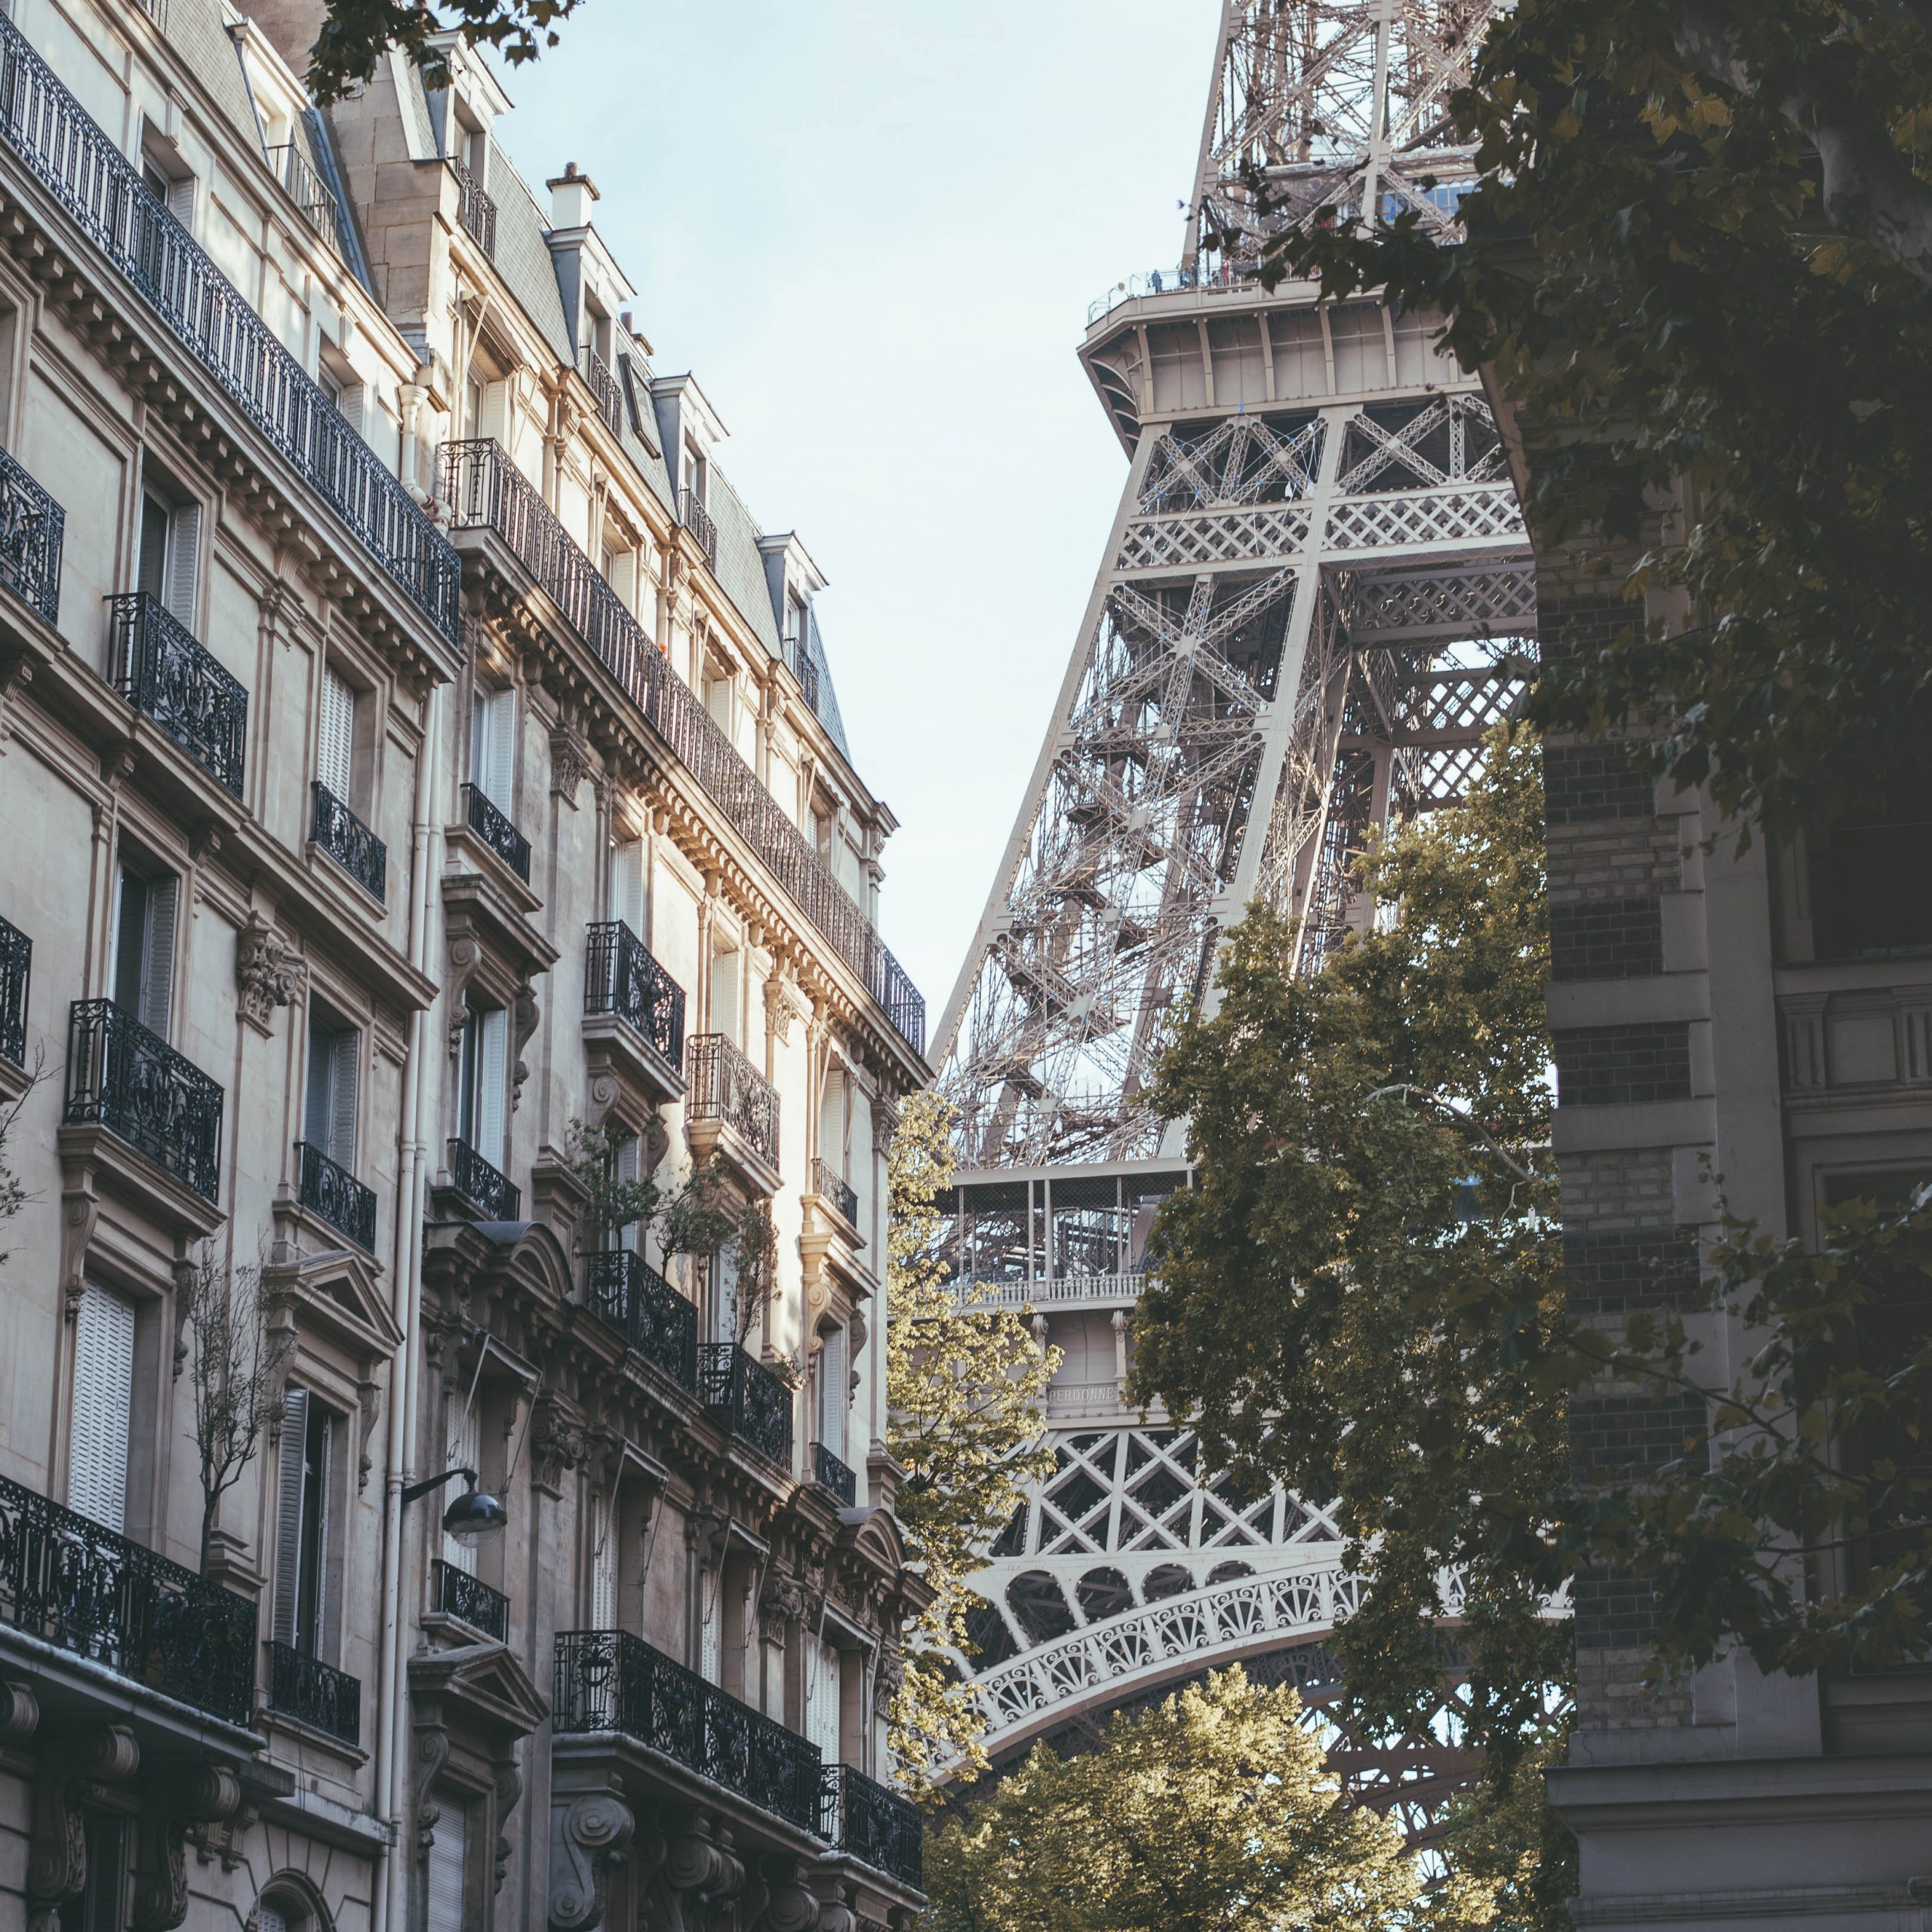 Best view of the Eiffel Tower from Rue de l'université